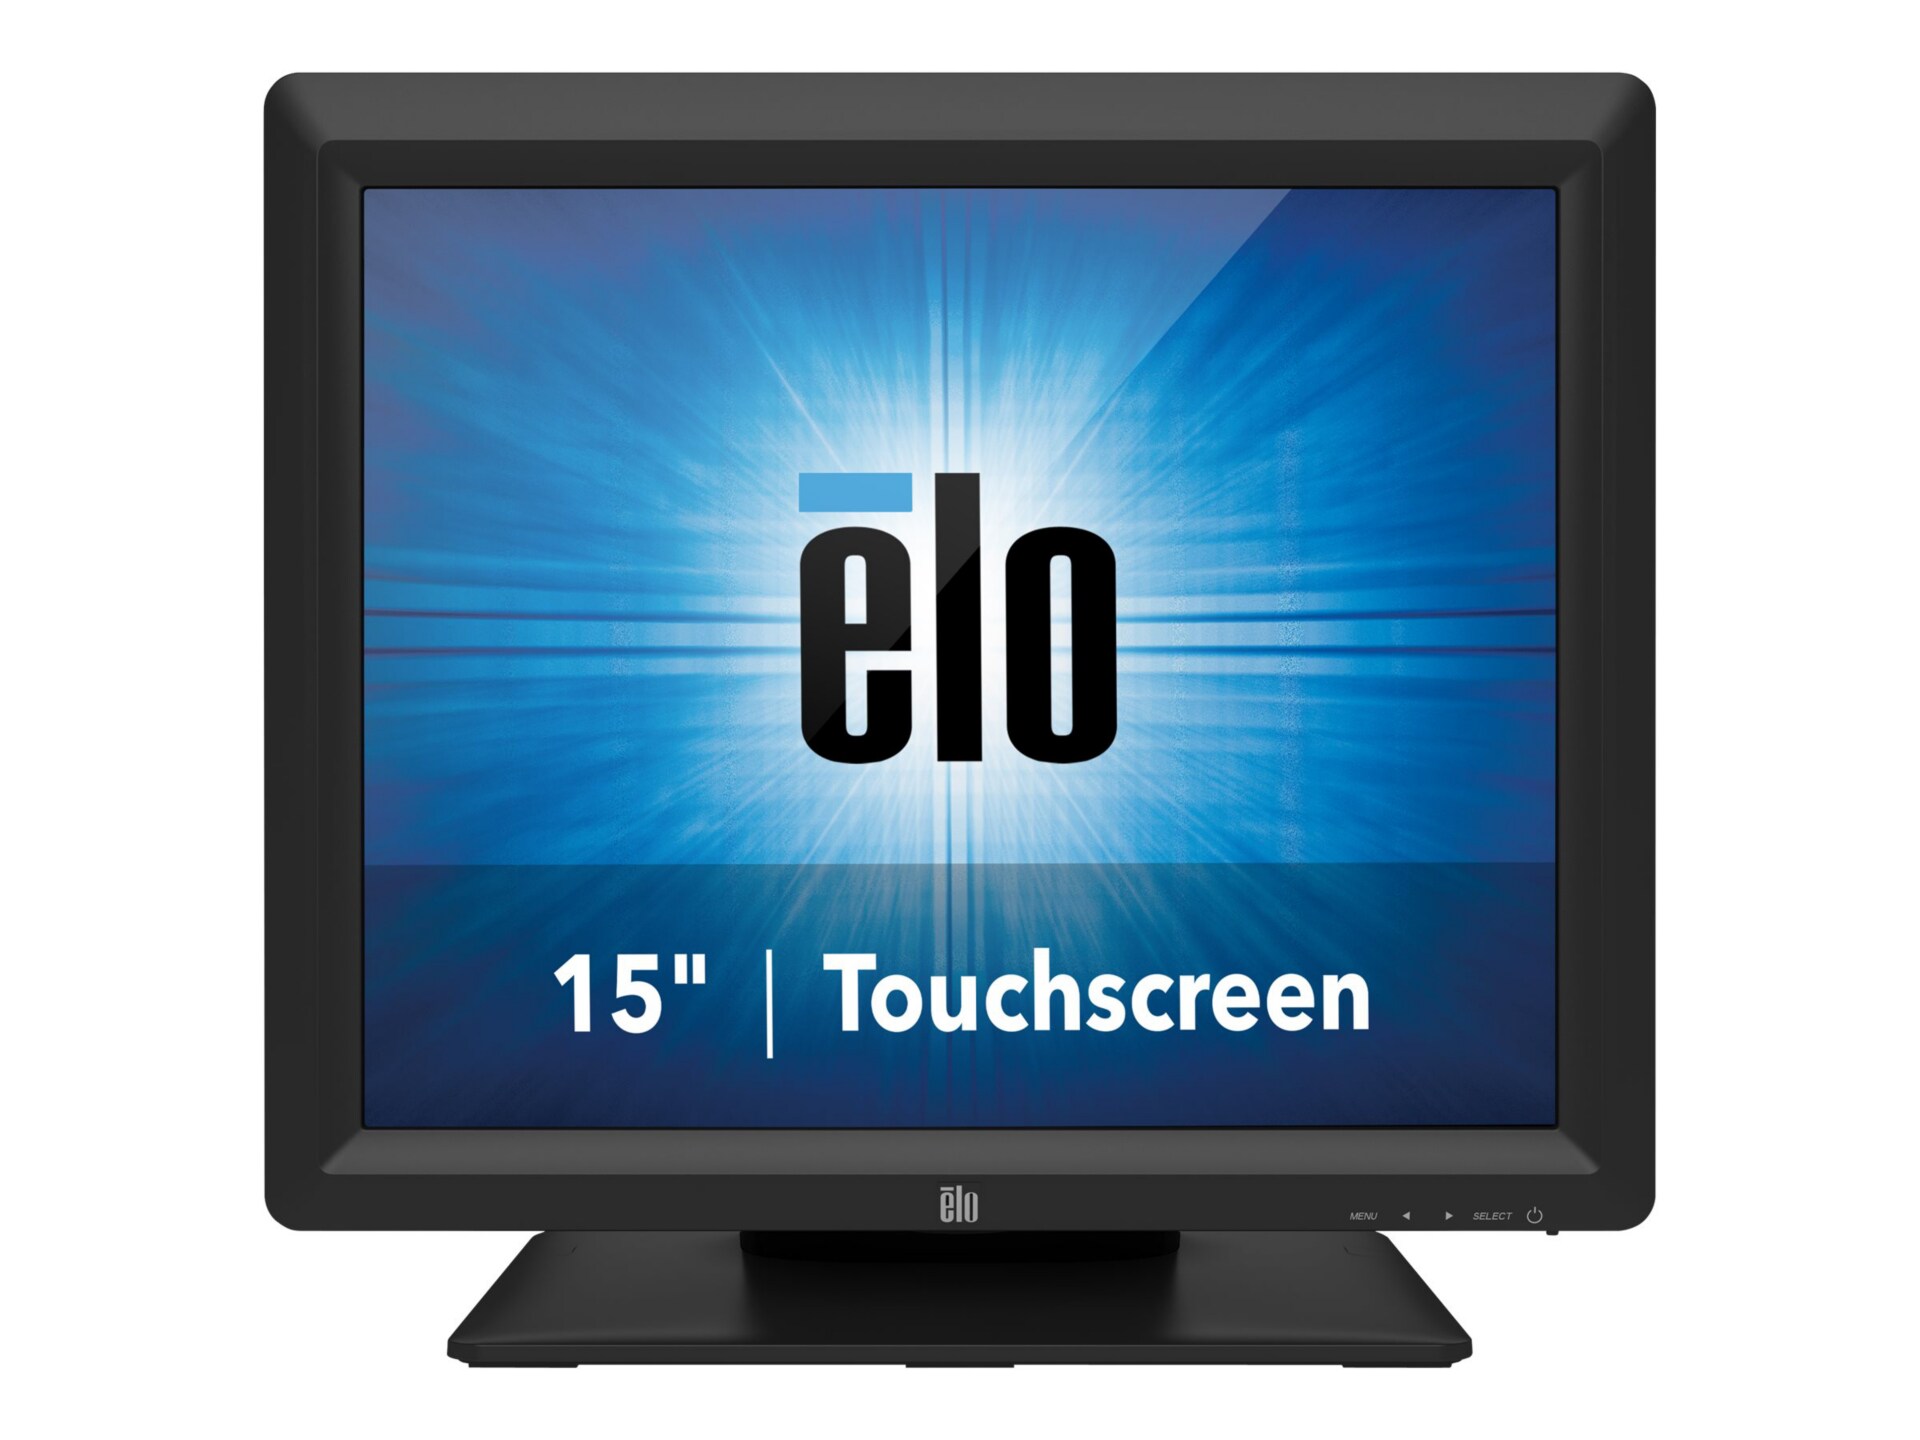 Elo 1517L - 15" Touchscreen Monitor